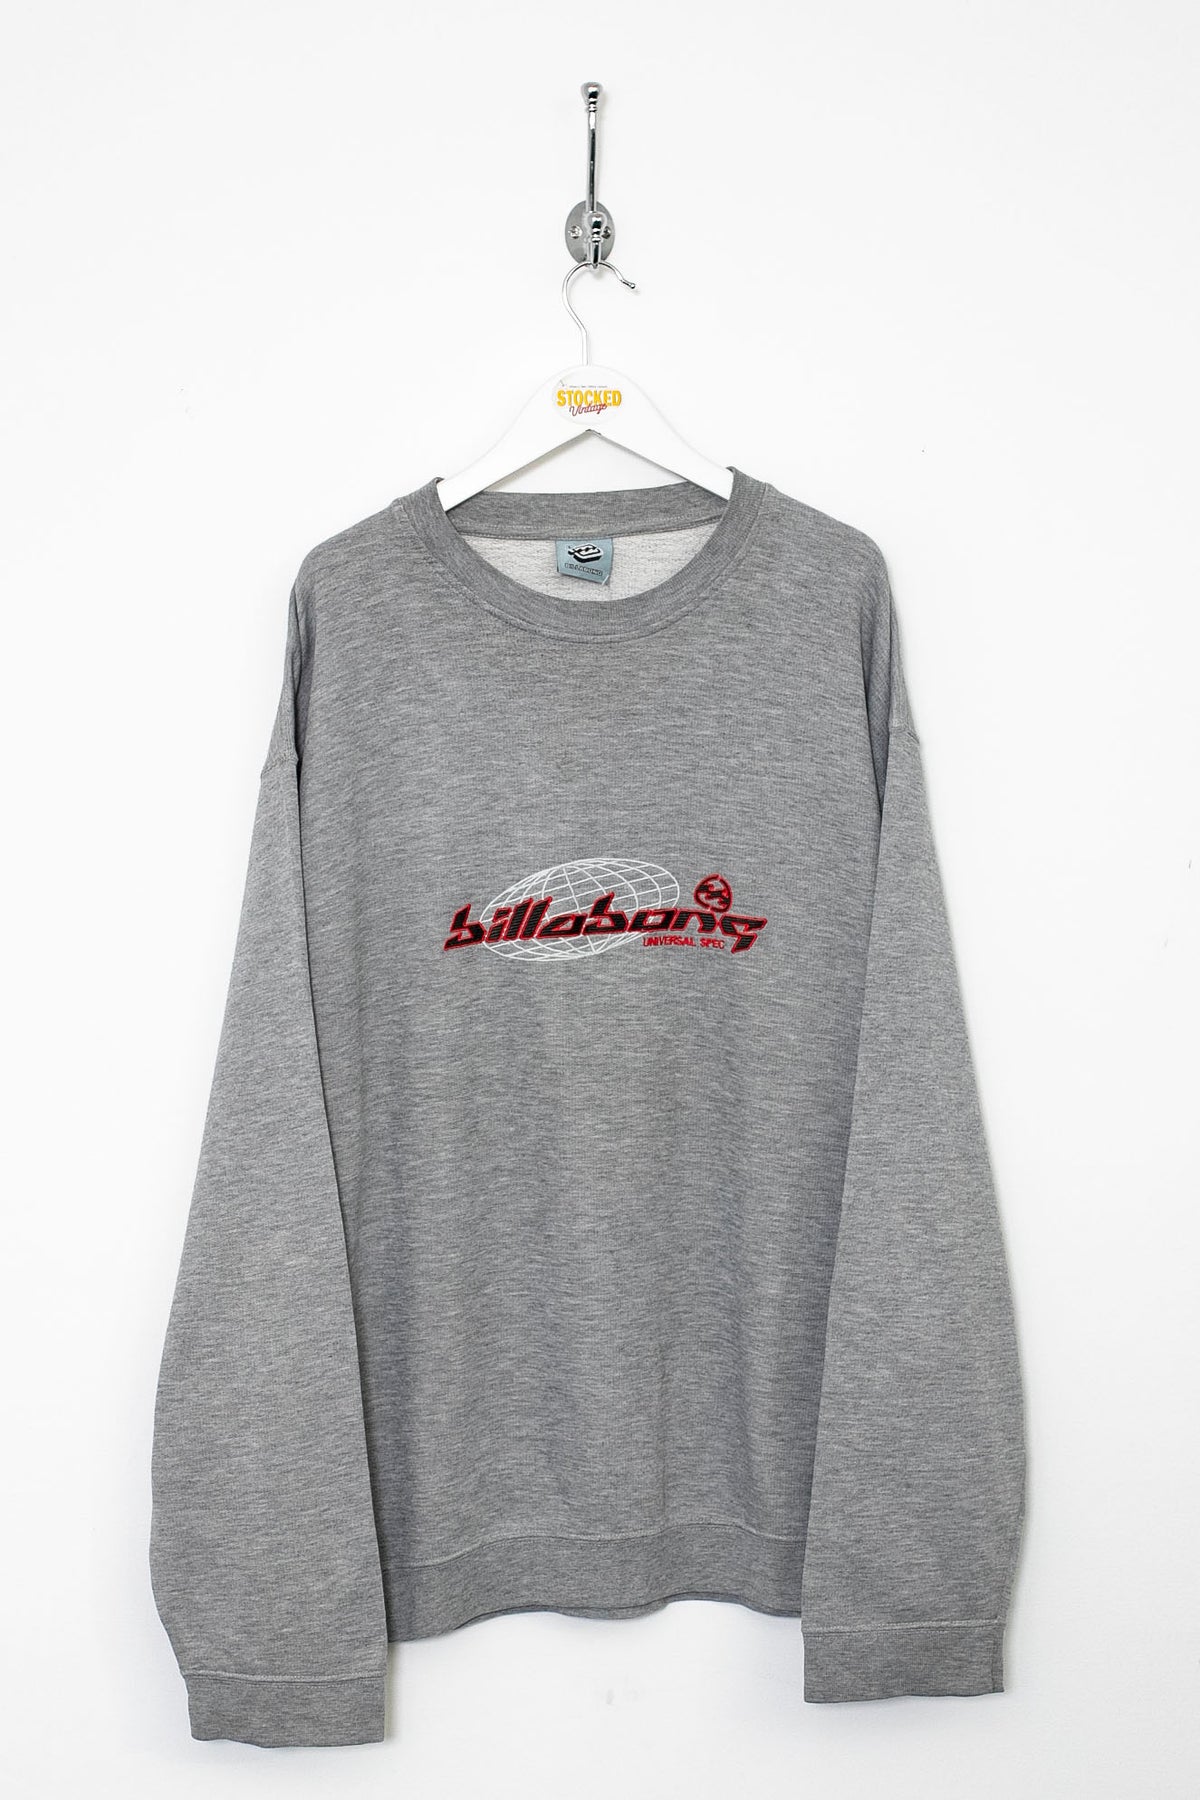 00s Billabong Sweatshirt (XL)